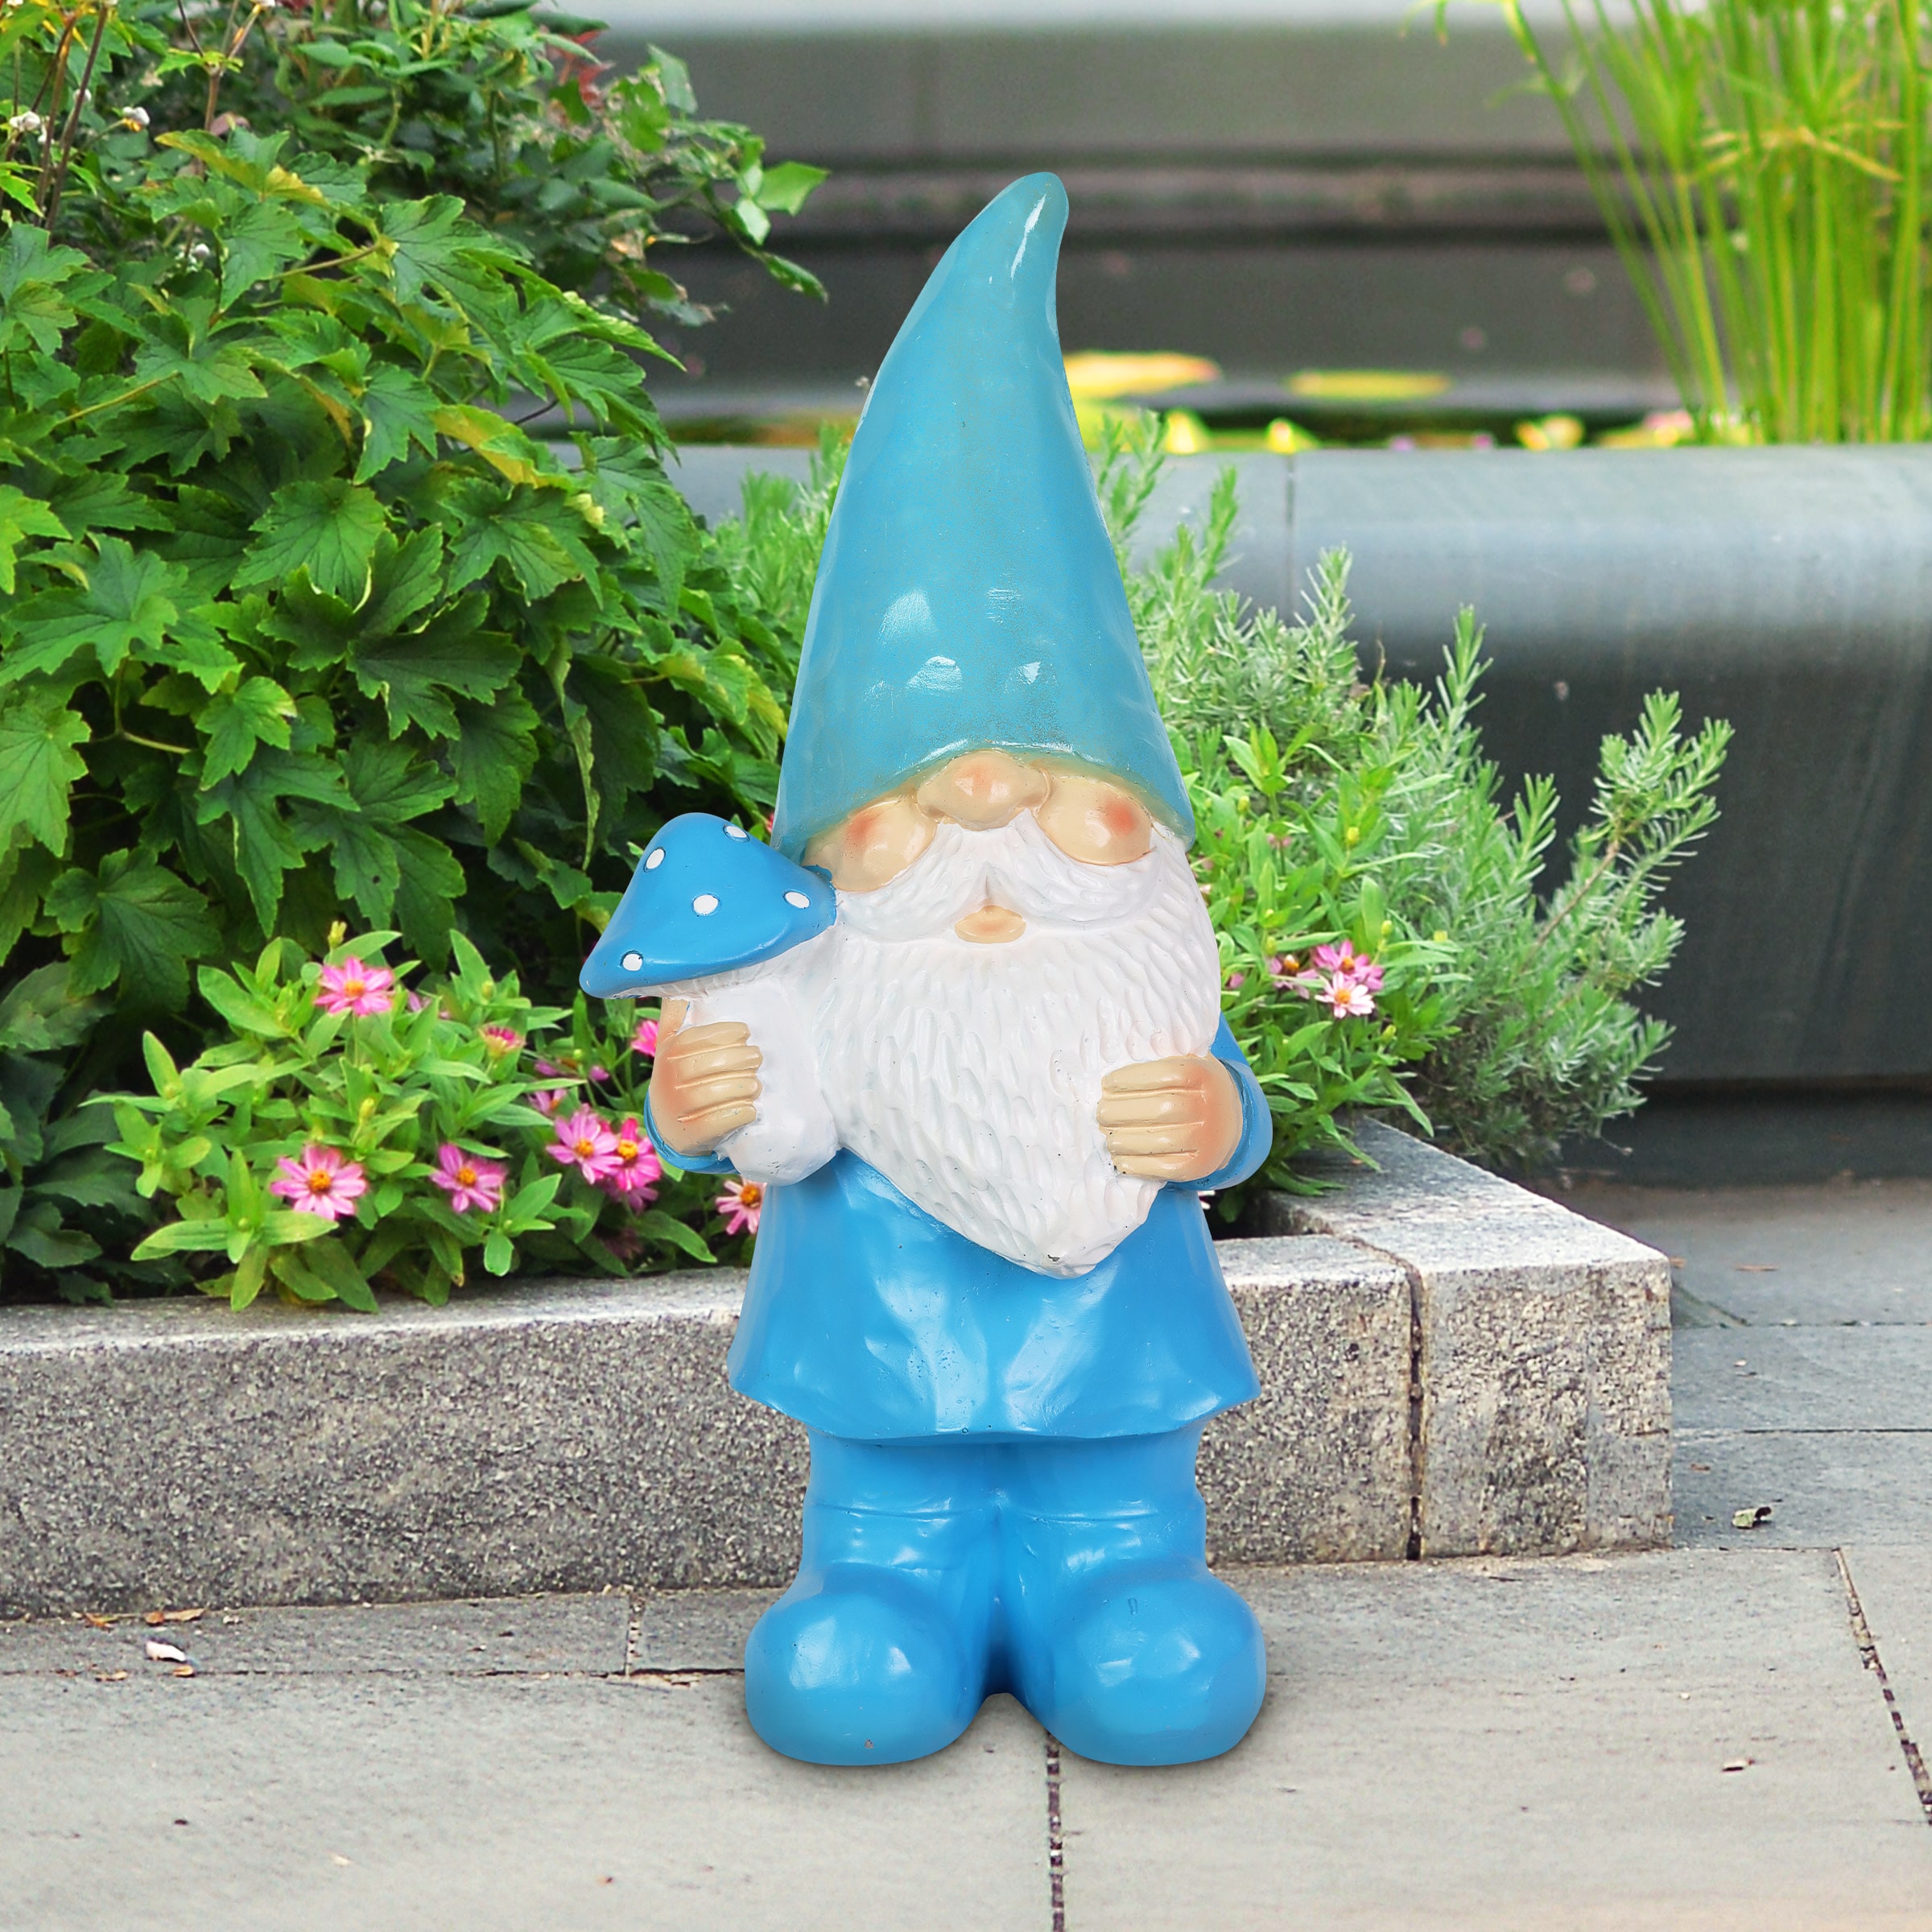 Sunny Club Outdoor Blue Terracotta Gnome Garden Statue, 14